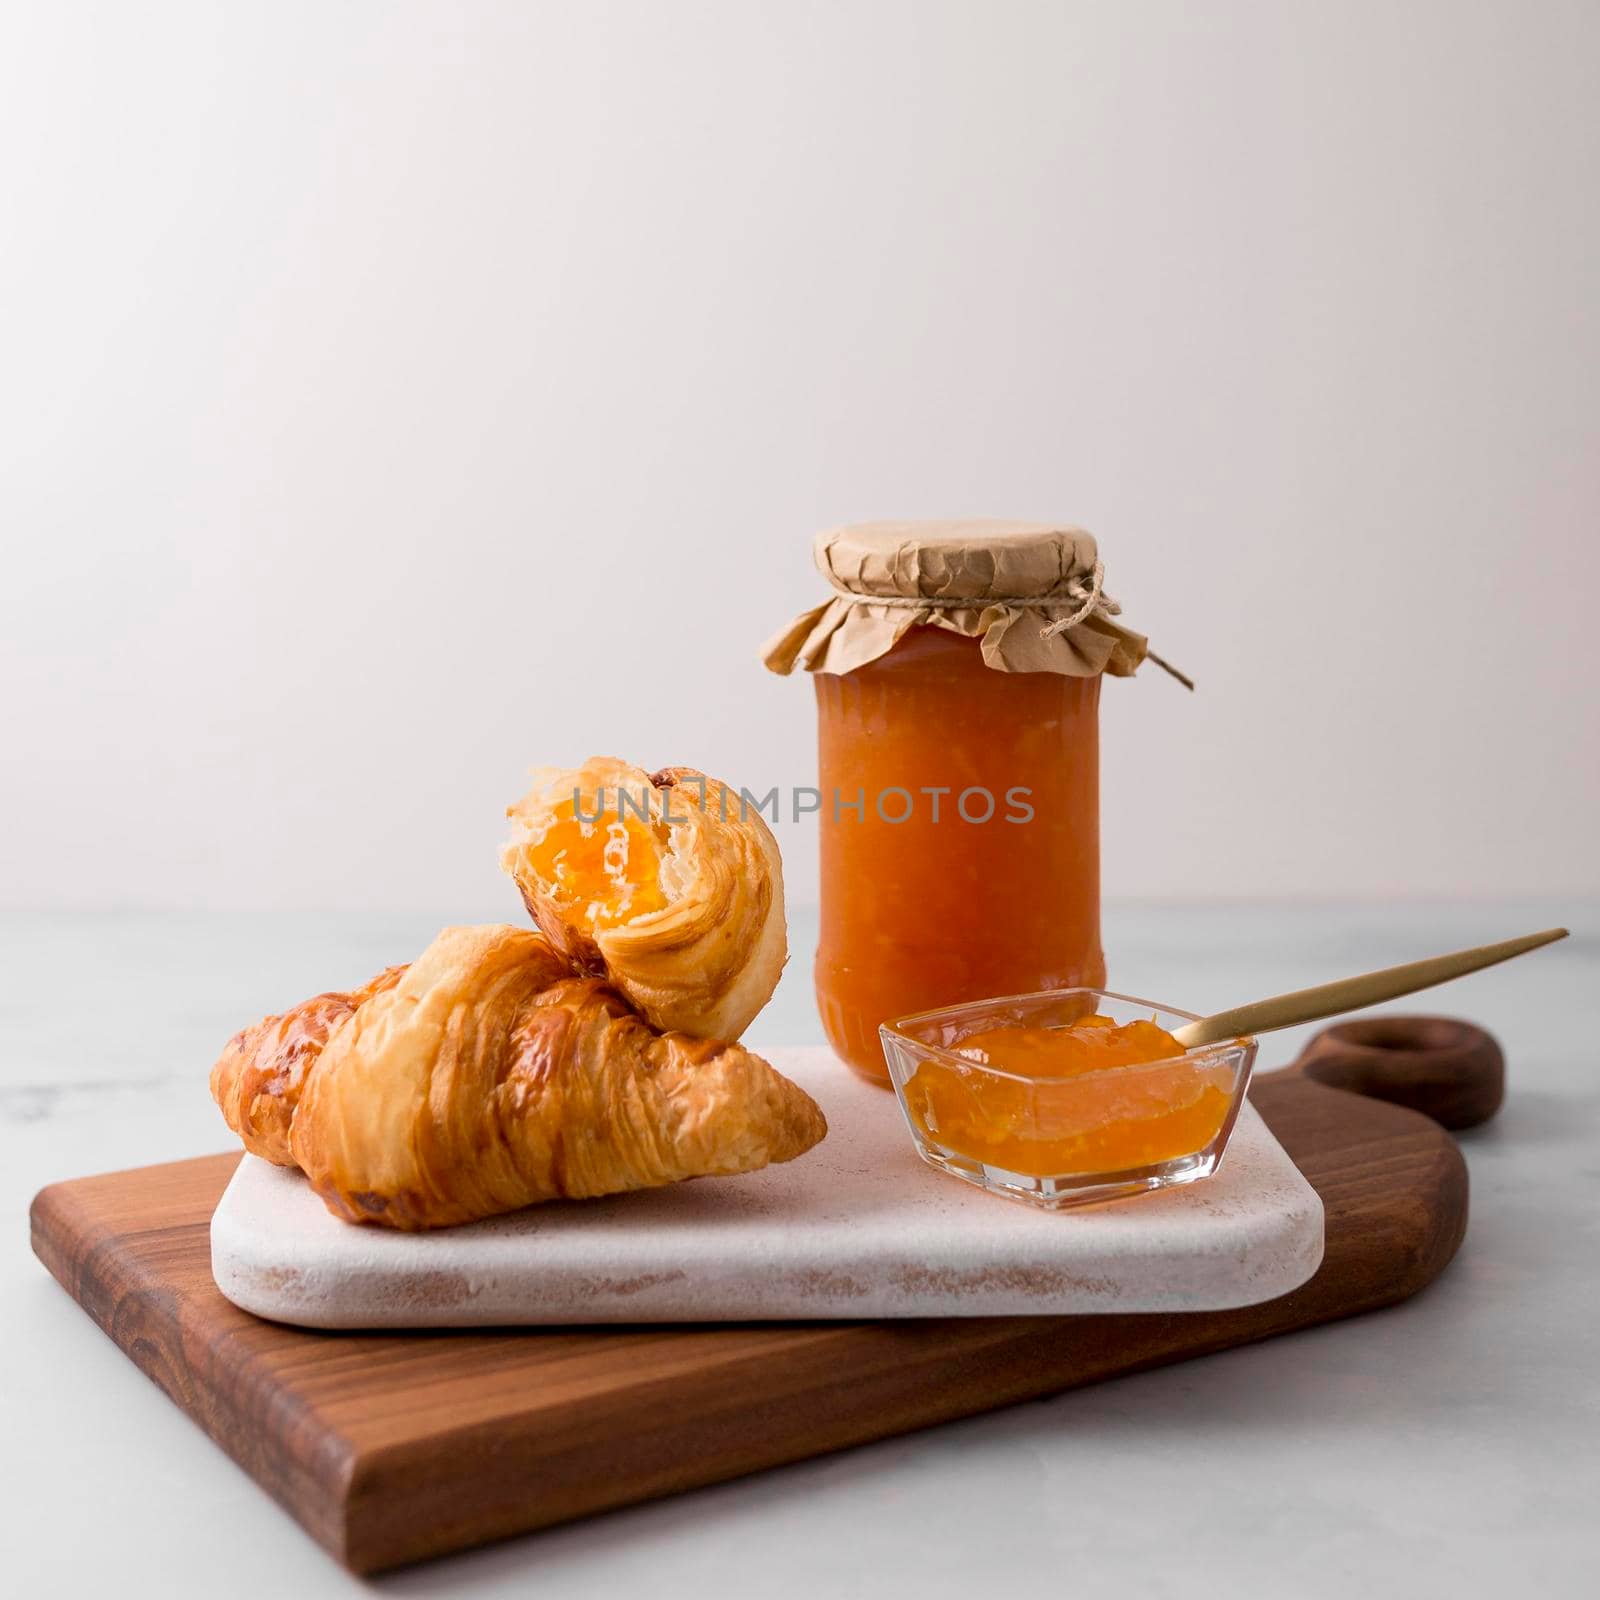 french croissant breakfast jam. High quality photo by Zahard